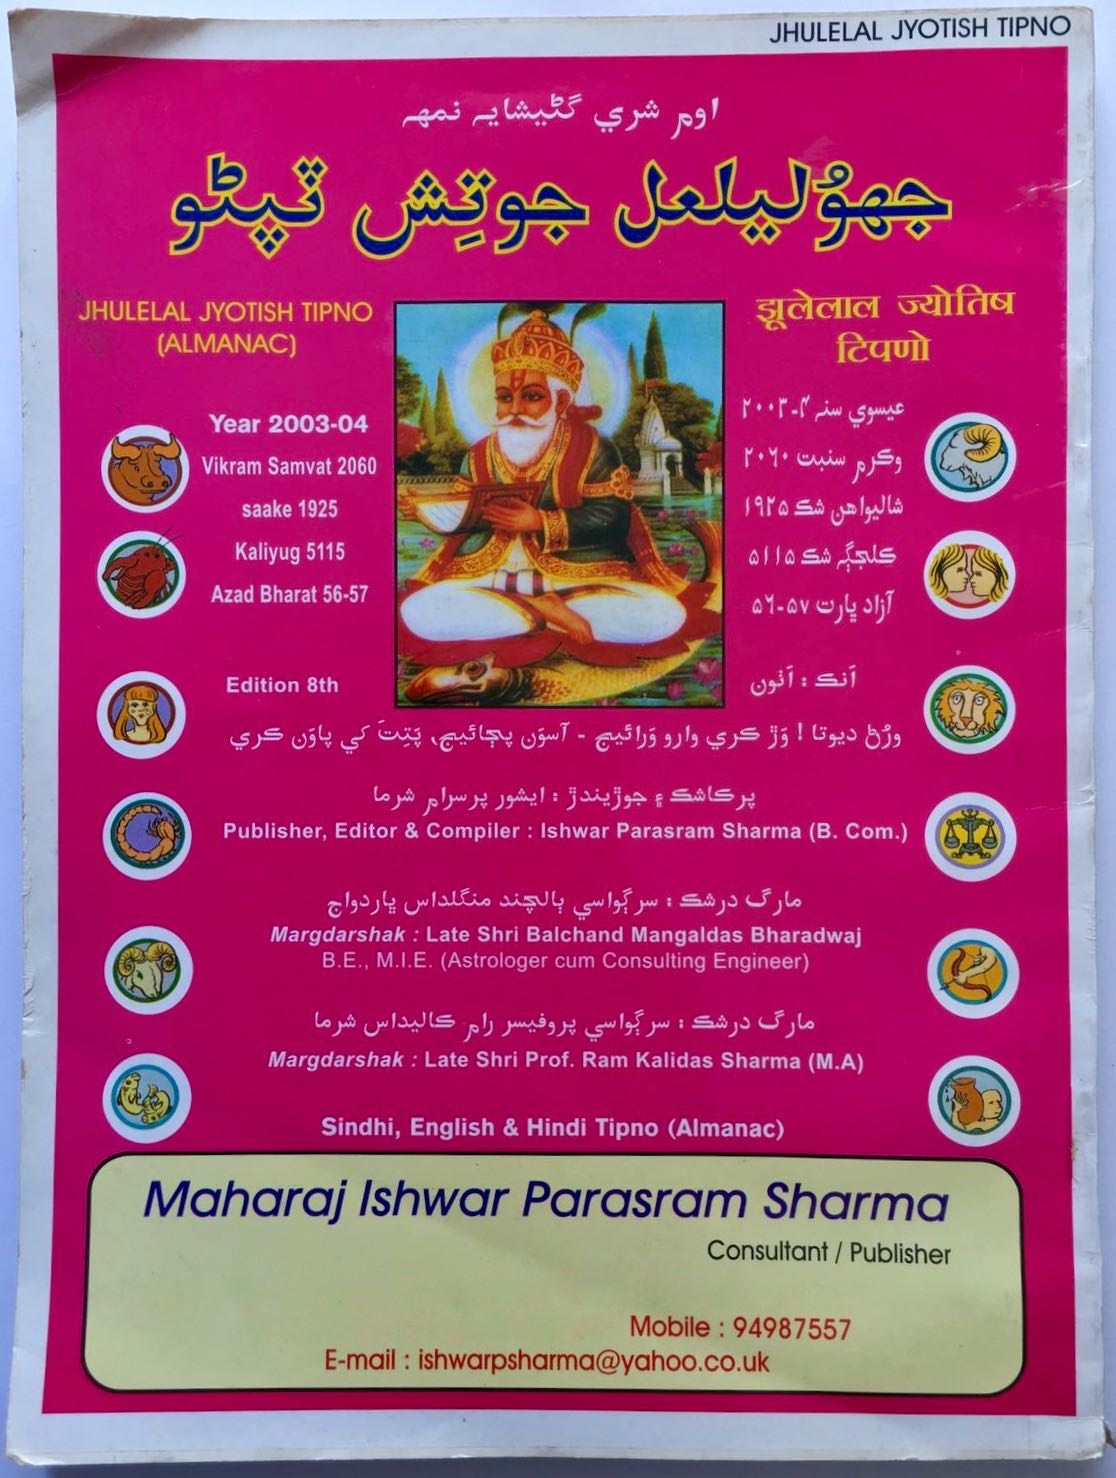 Jhulelal Jyotish Tipno (Almanac) Year 2003-04 compiled by Maharaj Ishwar Parsram Sharma Sindhi, English and Hindi Tipno (Almanac) - Top cover page Sindhi side